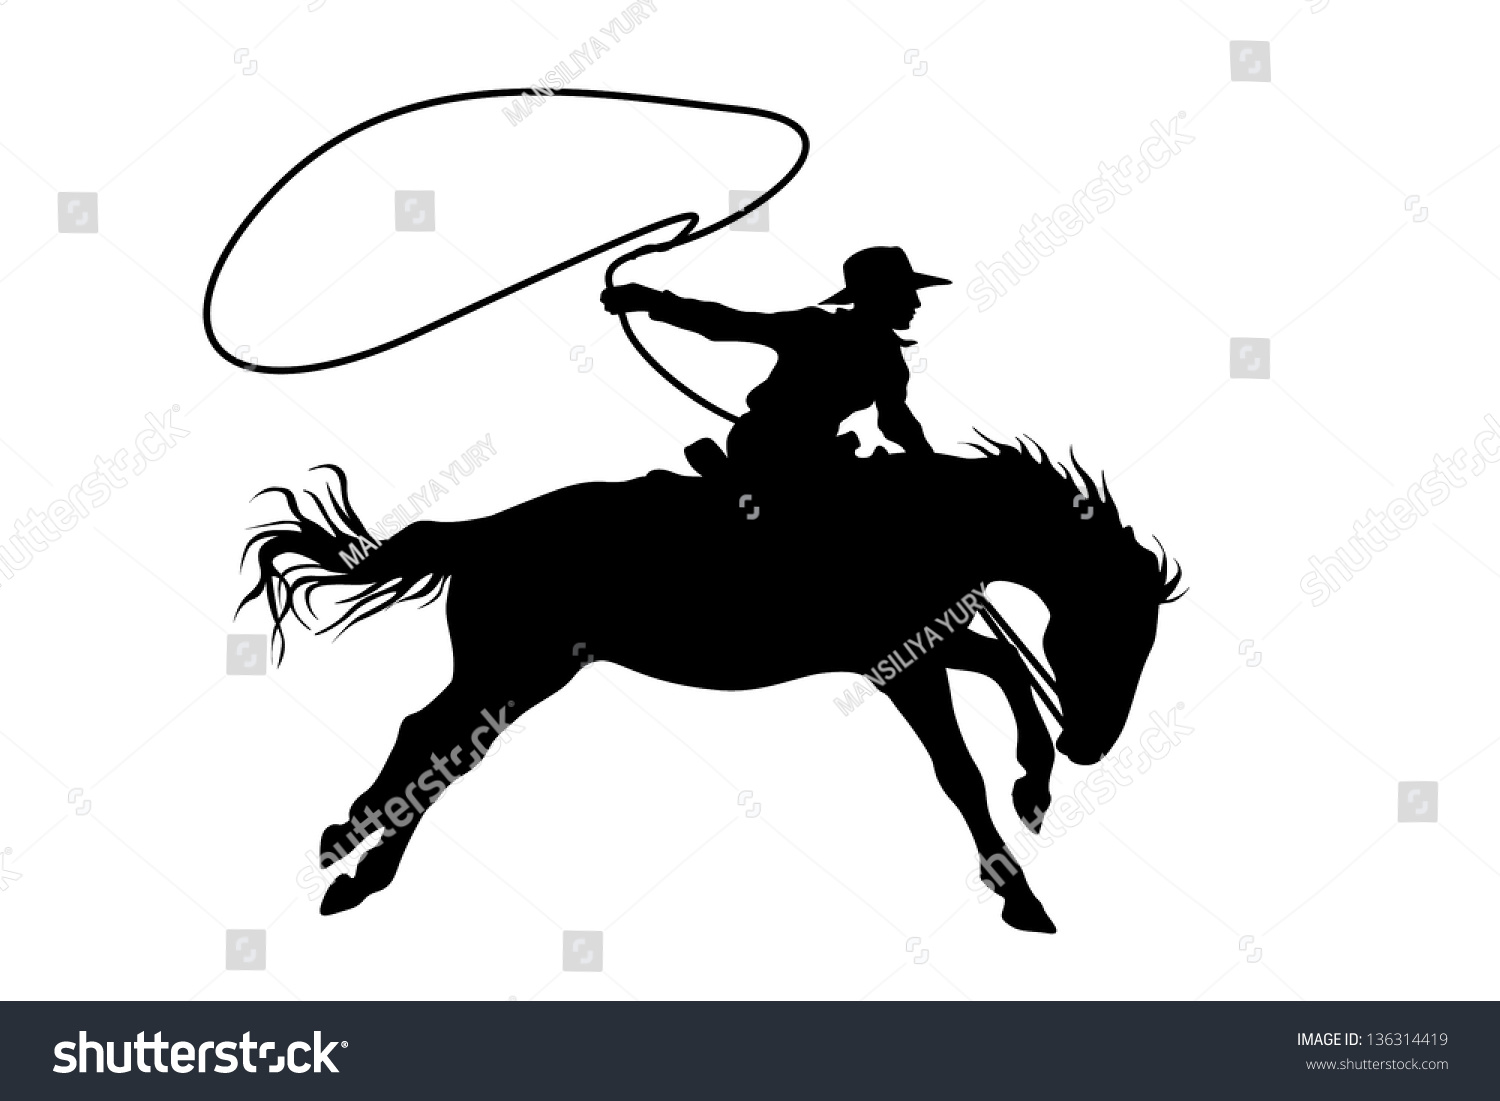 Cowboy Stock Vector 136314419 - Shutterstock